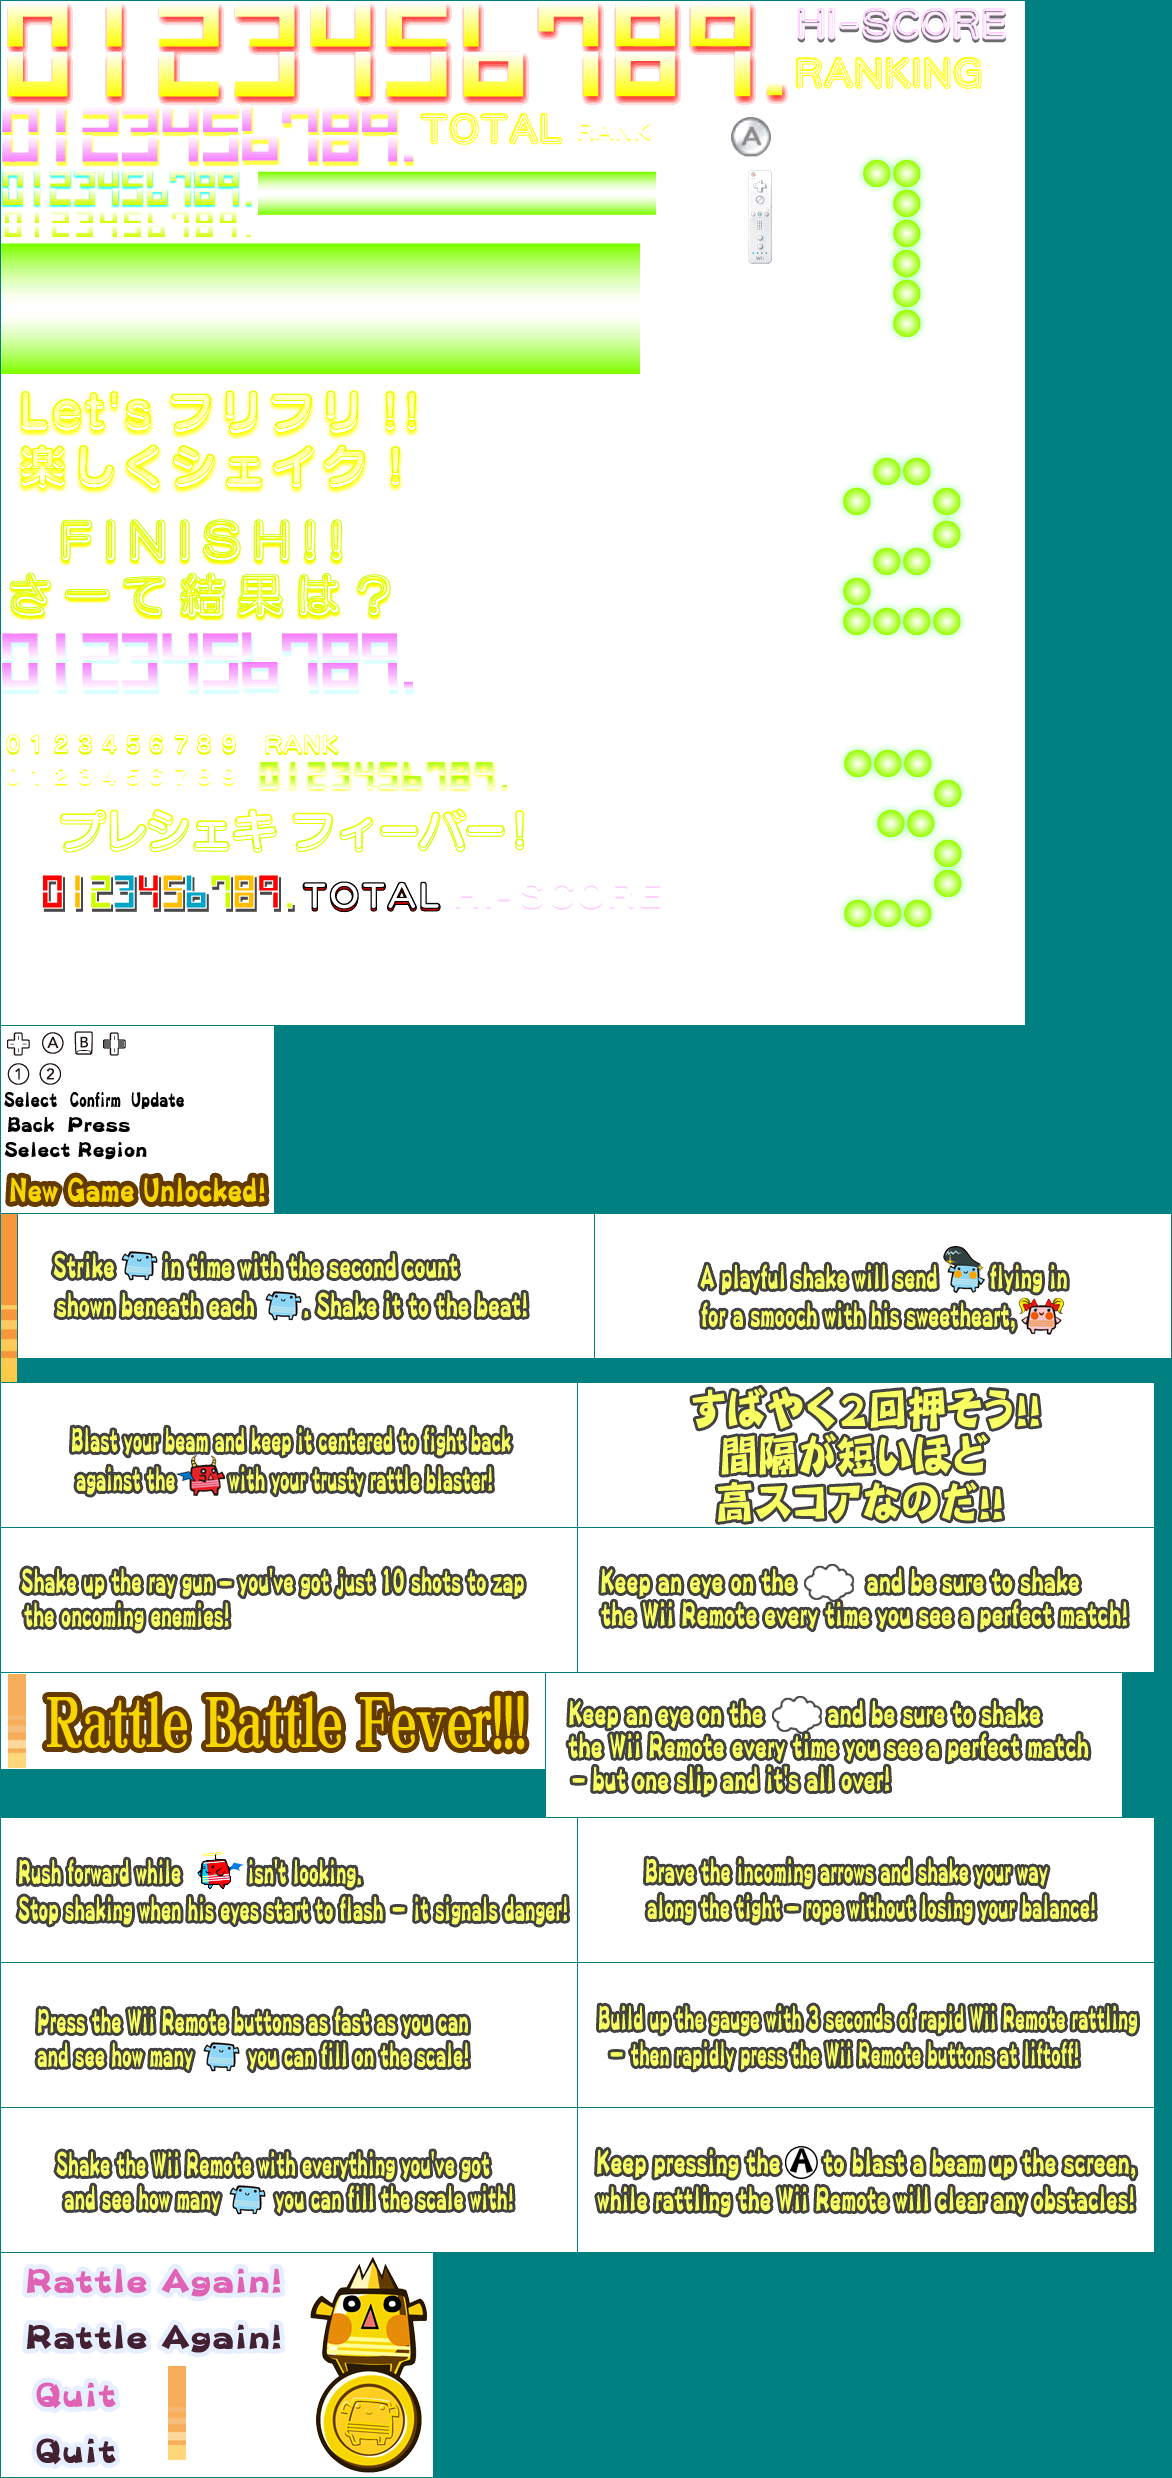 3-2-1, Rattle Battle! - Text